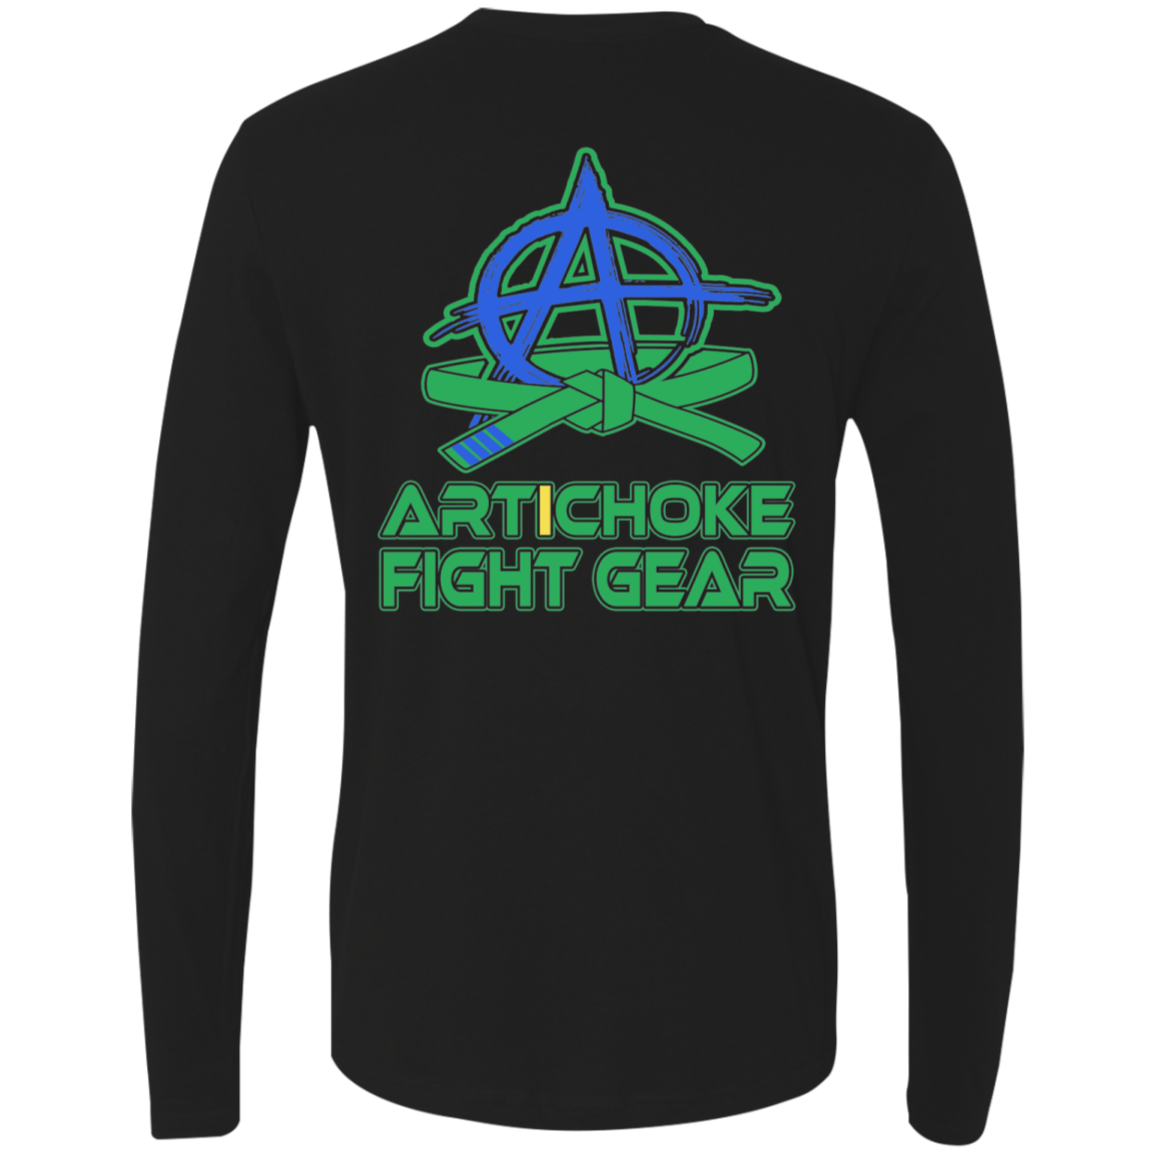 Artichoke Fight Gear Custom Design #5. BJJ MLB Brazil Flag Colors. Parody v2. Men's 100% combed ring-spun cotton long sleeve